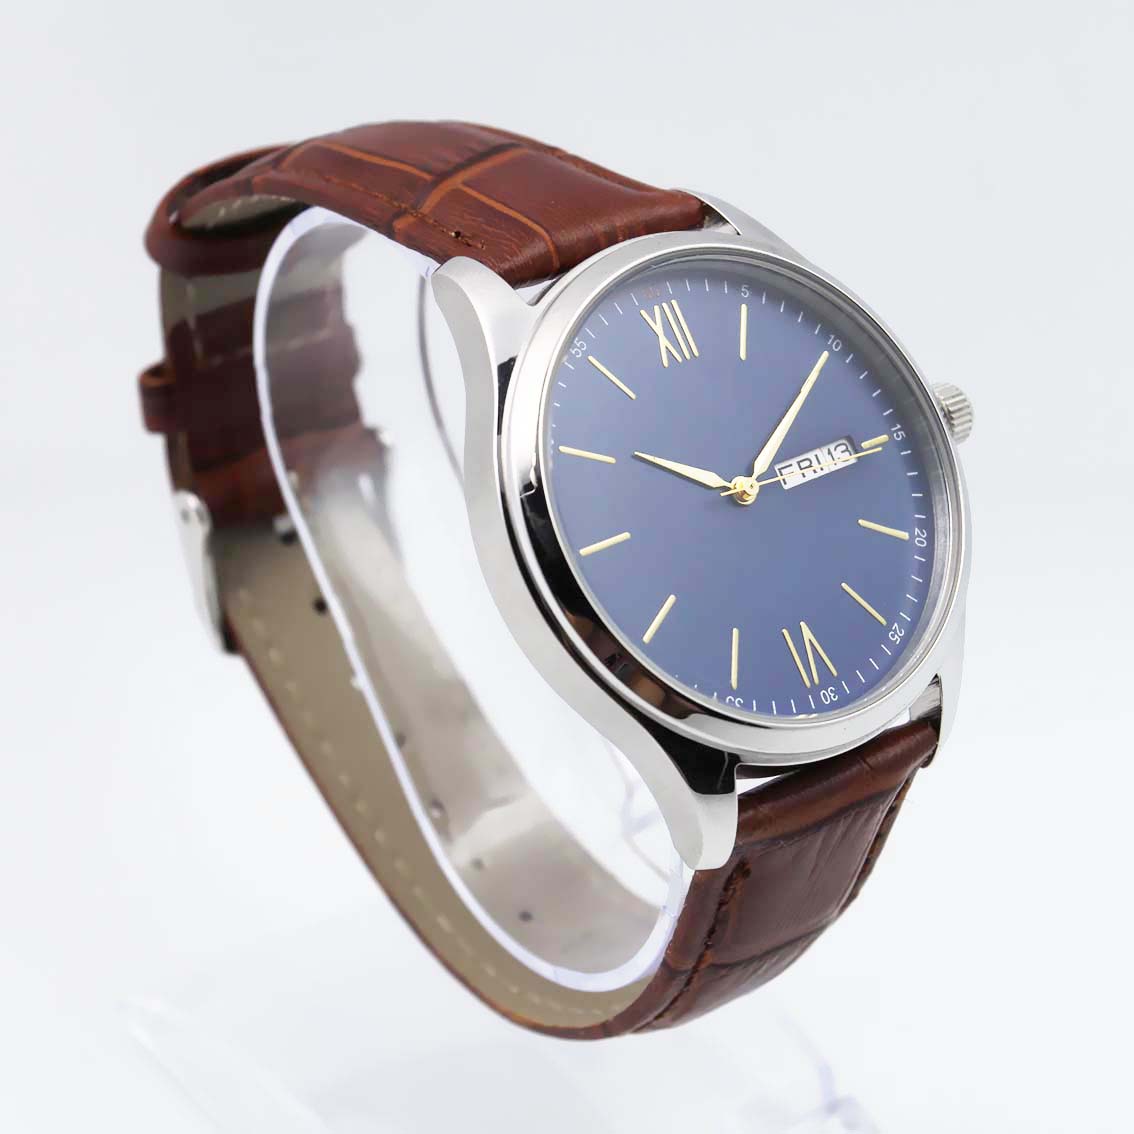 #02077Men's wristwatch quartz analog leather strap watch